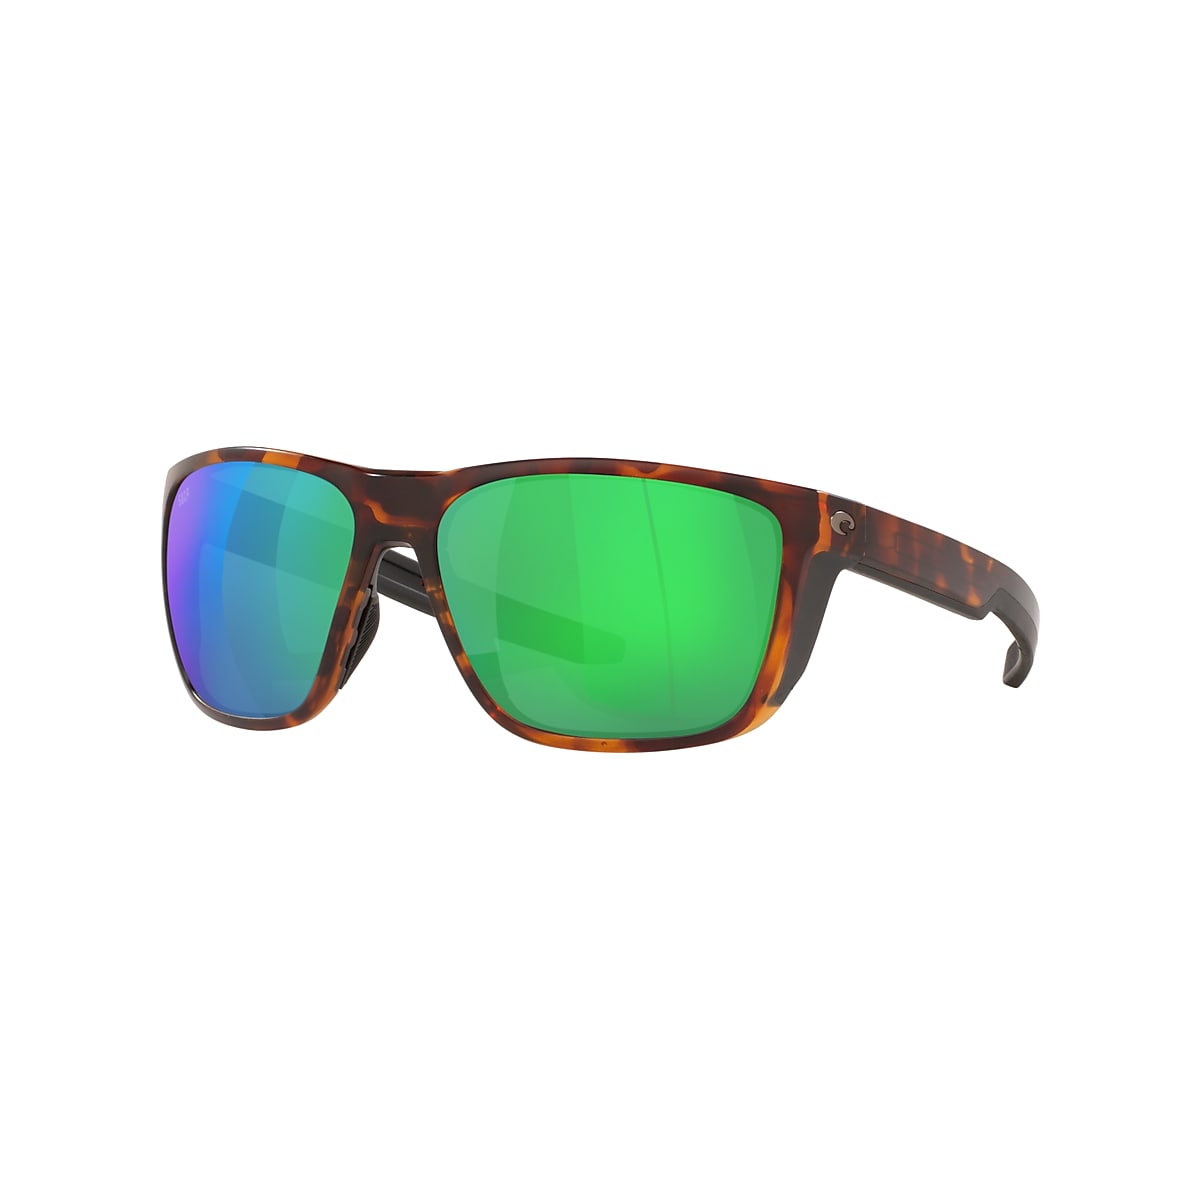 Everglades Polarized HD Sunglasses